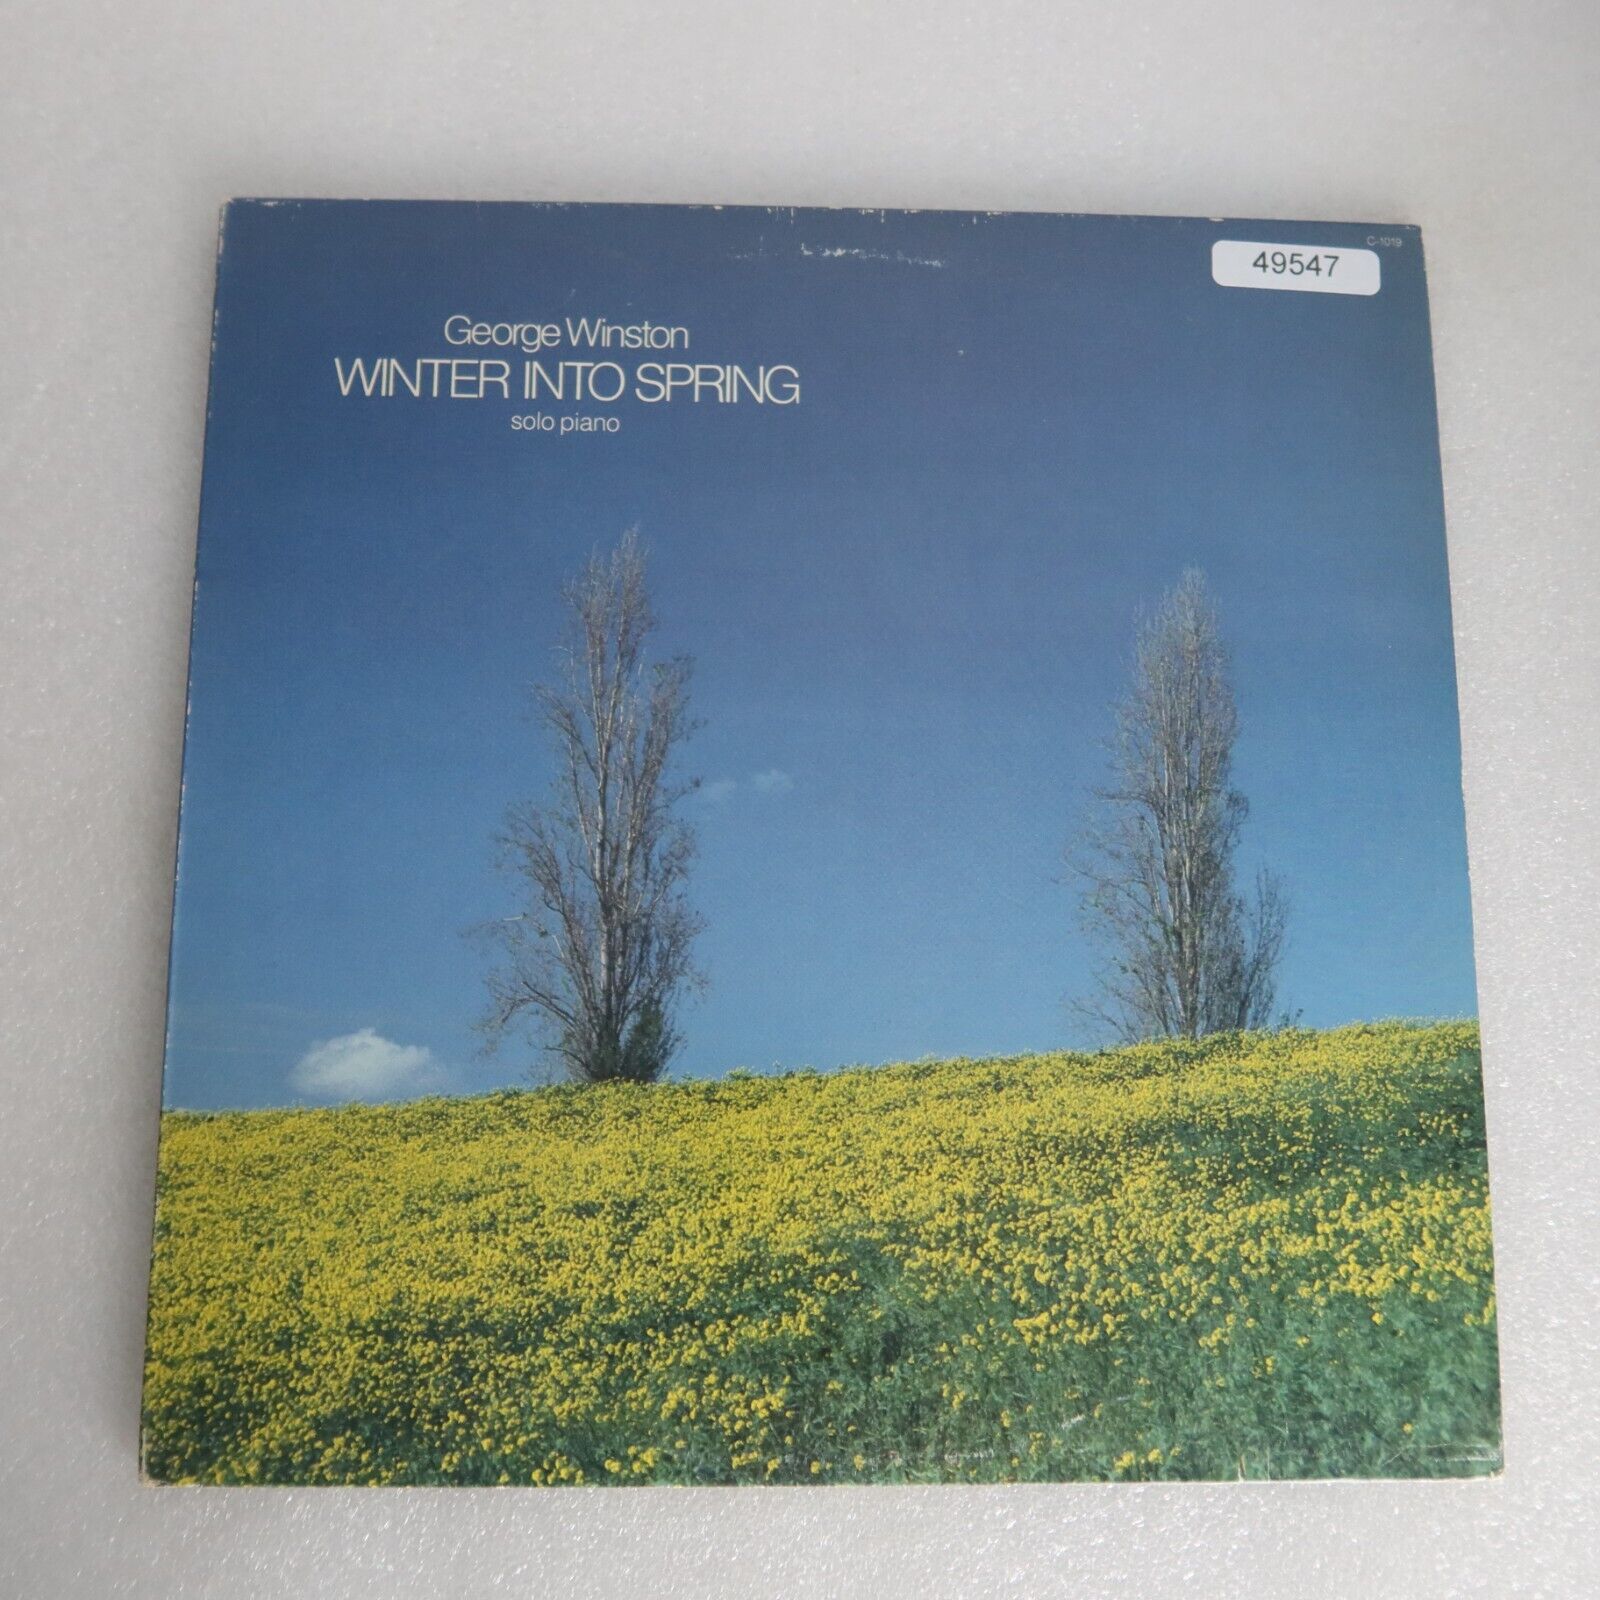 George Winston Winter Into Spring LP Vinyl Record Album